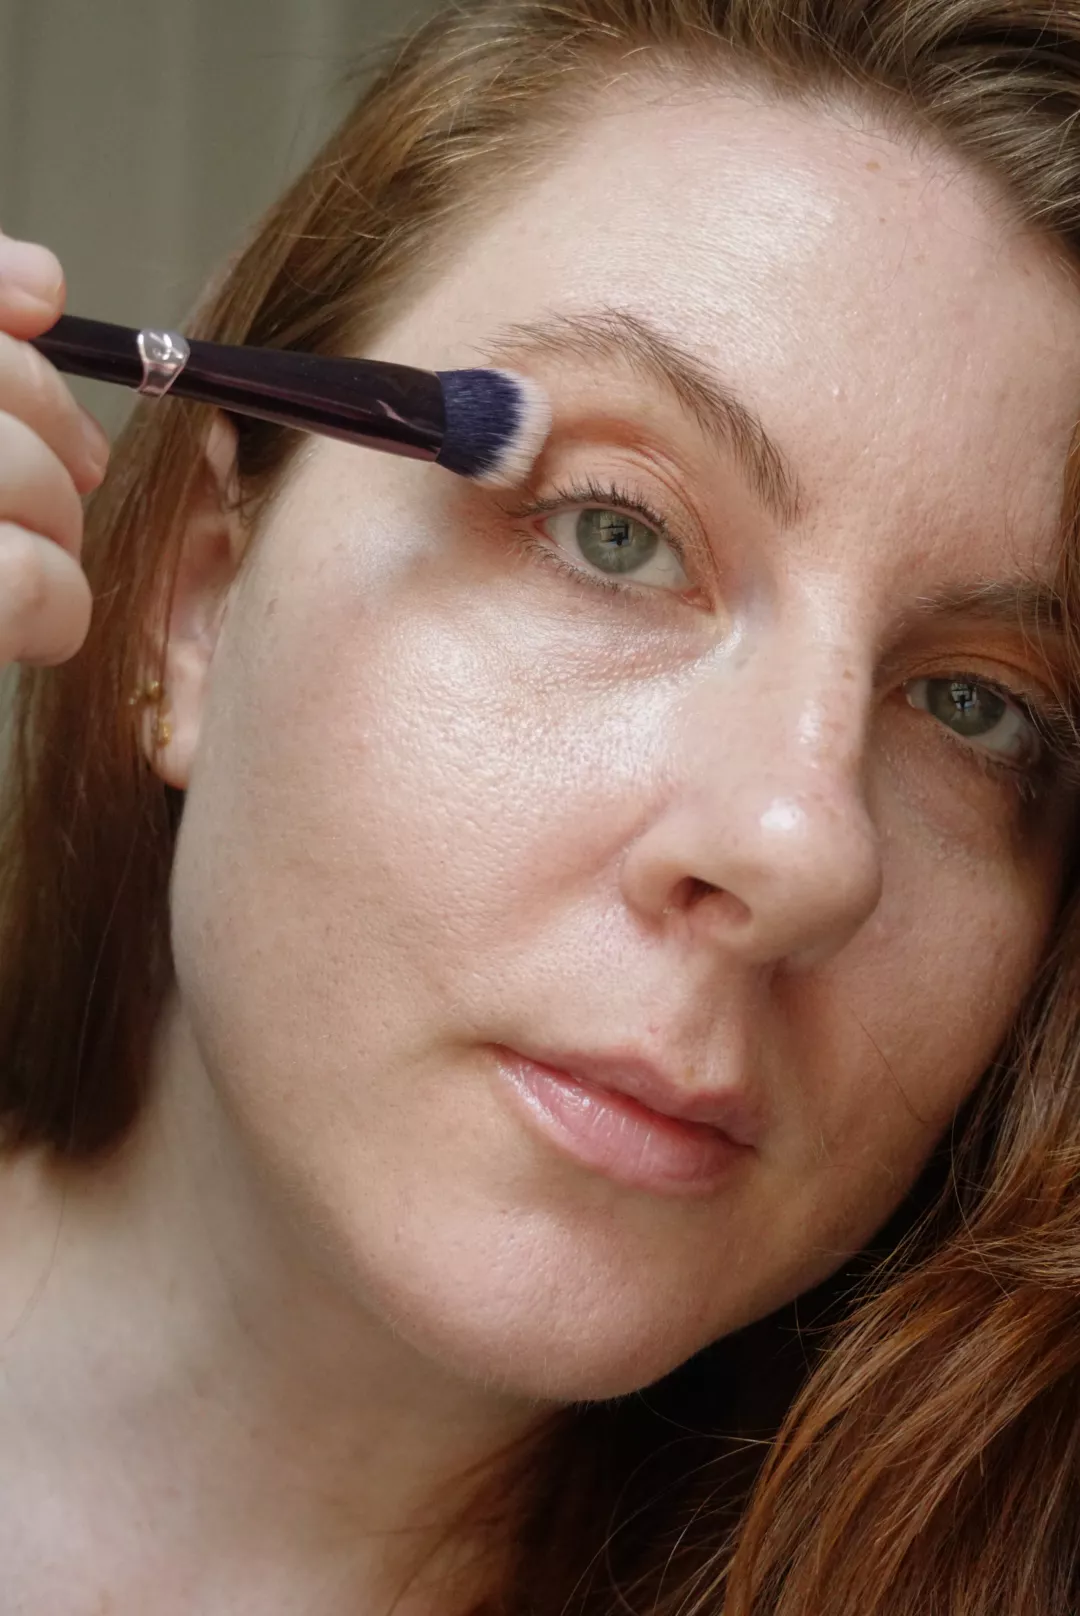 Makeup artist and Byrdie writer Ashley Rebecca applying eyeshadow to eyelid with brush